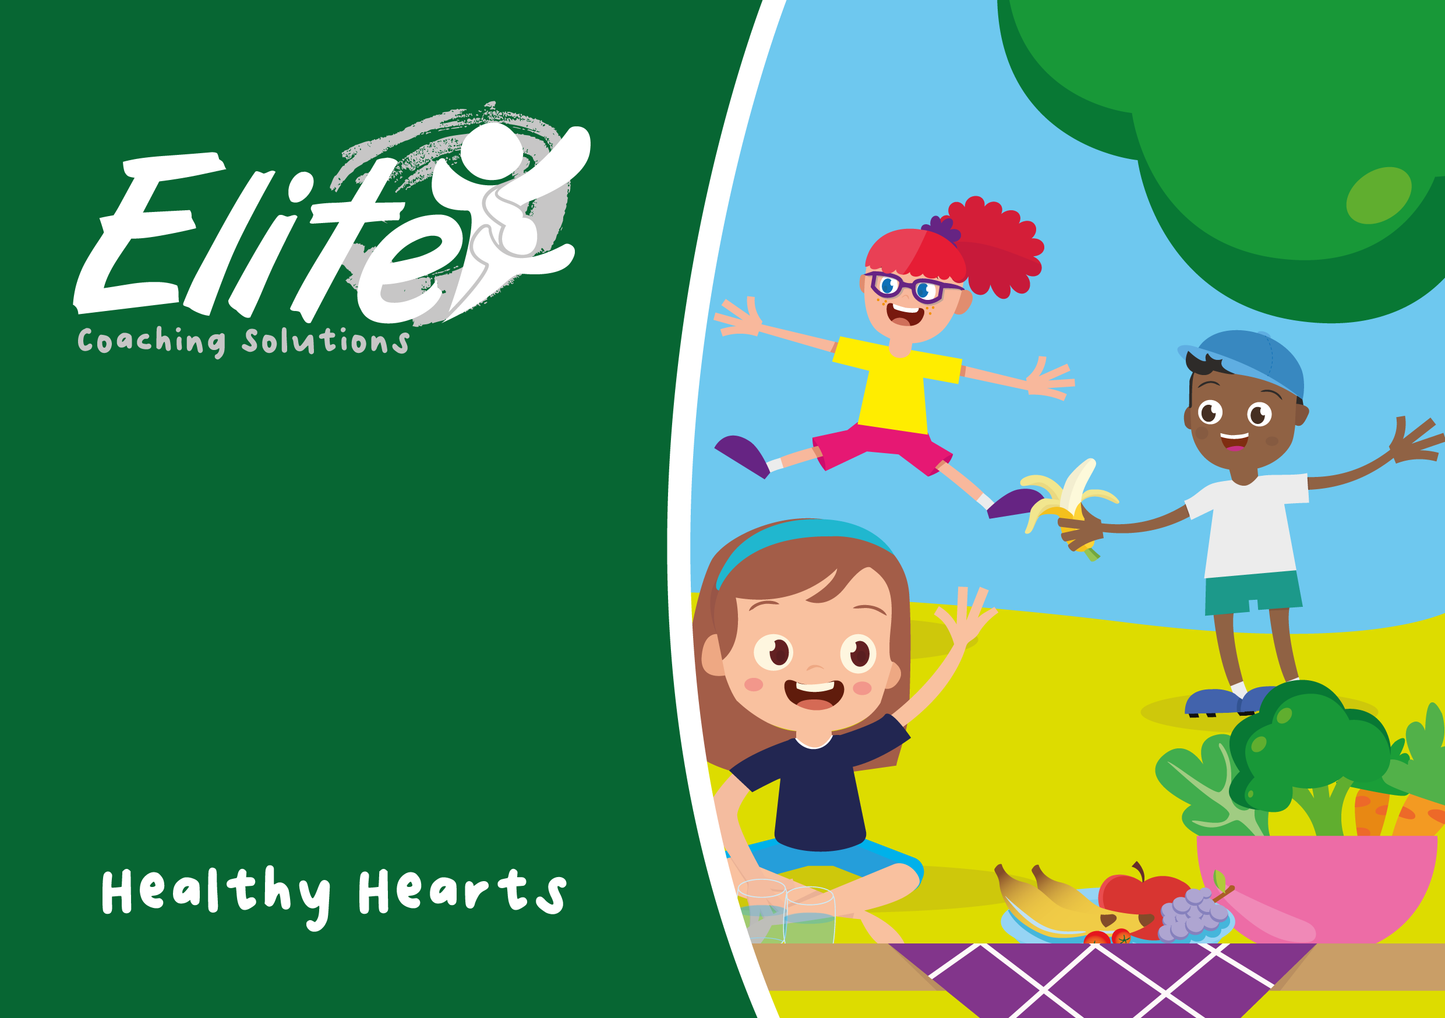 Healthy Hearts Programme